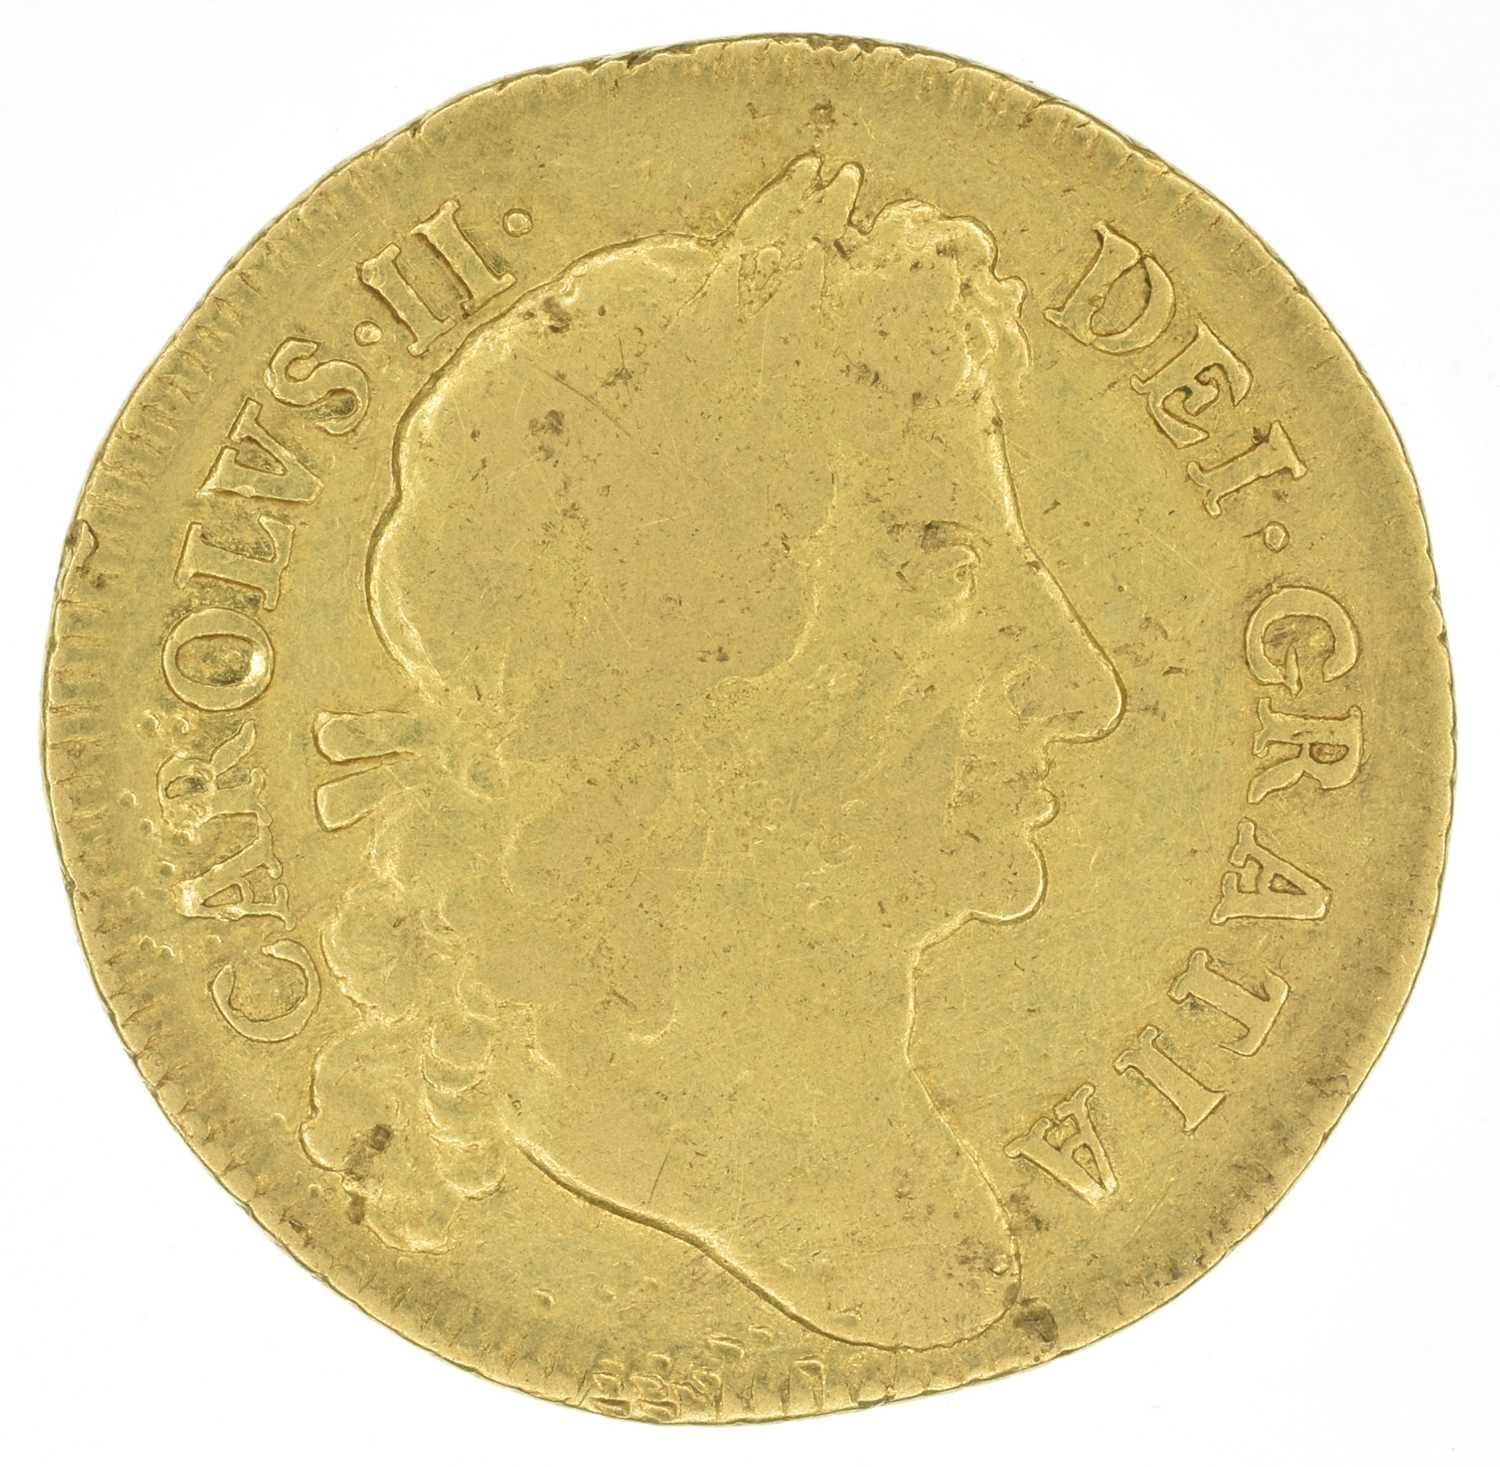 Lot 113 - King Charles II, Guinea, 1679, F.